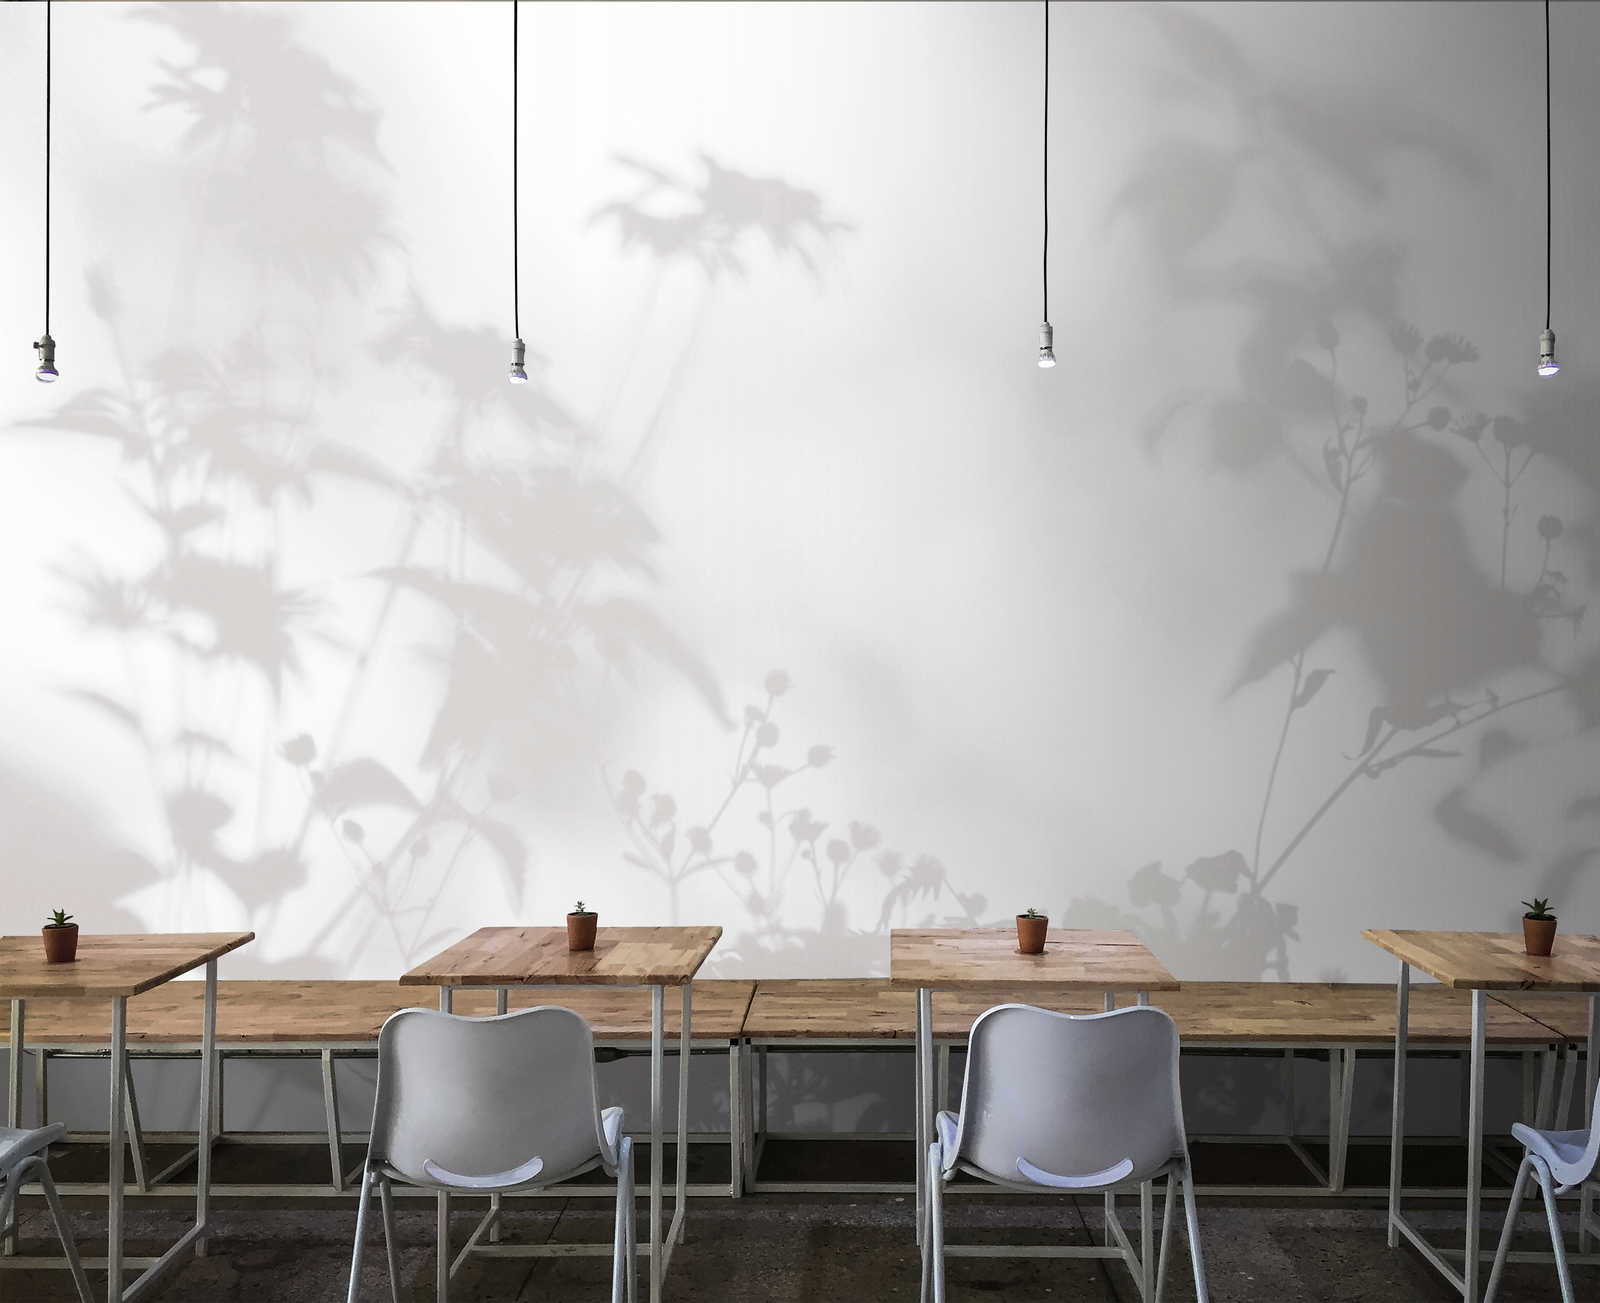             Shadow Room 2 – Natur Fototapete Grau & Weiß, verblasstes Design
        